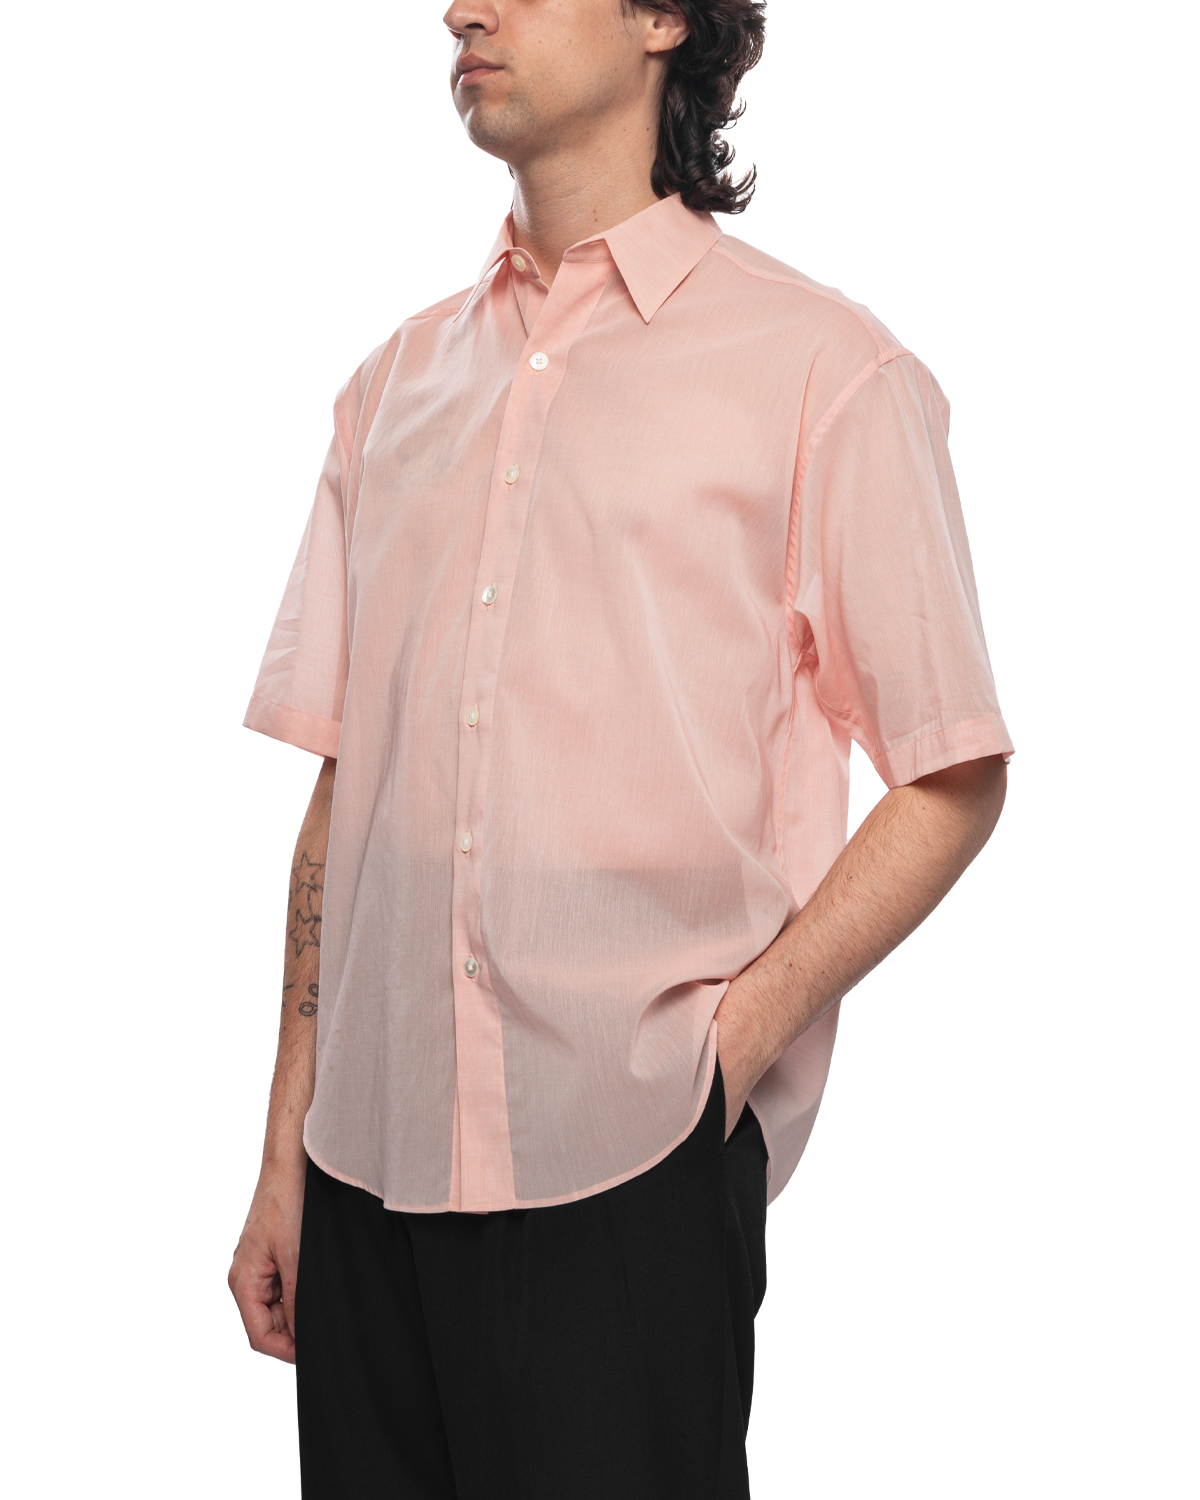 Hard Twist Finx Organdy Half Sleeved Shirt Light Pink Chambray